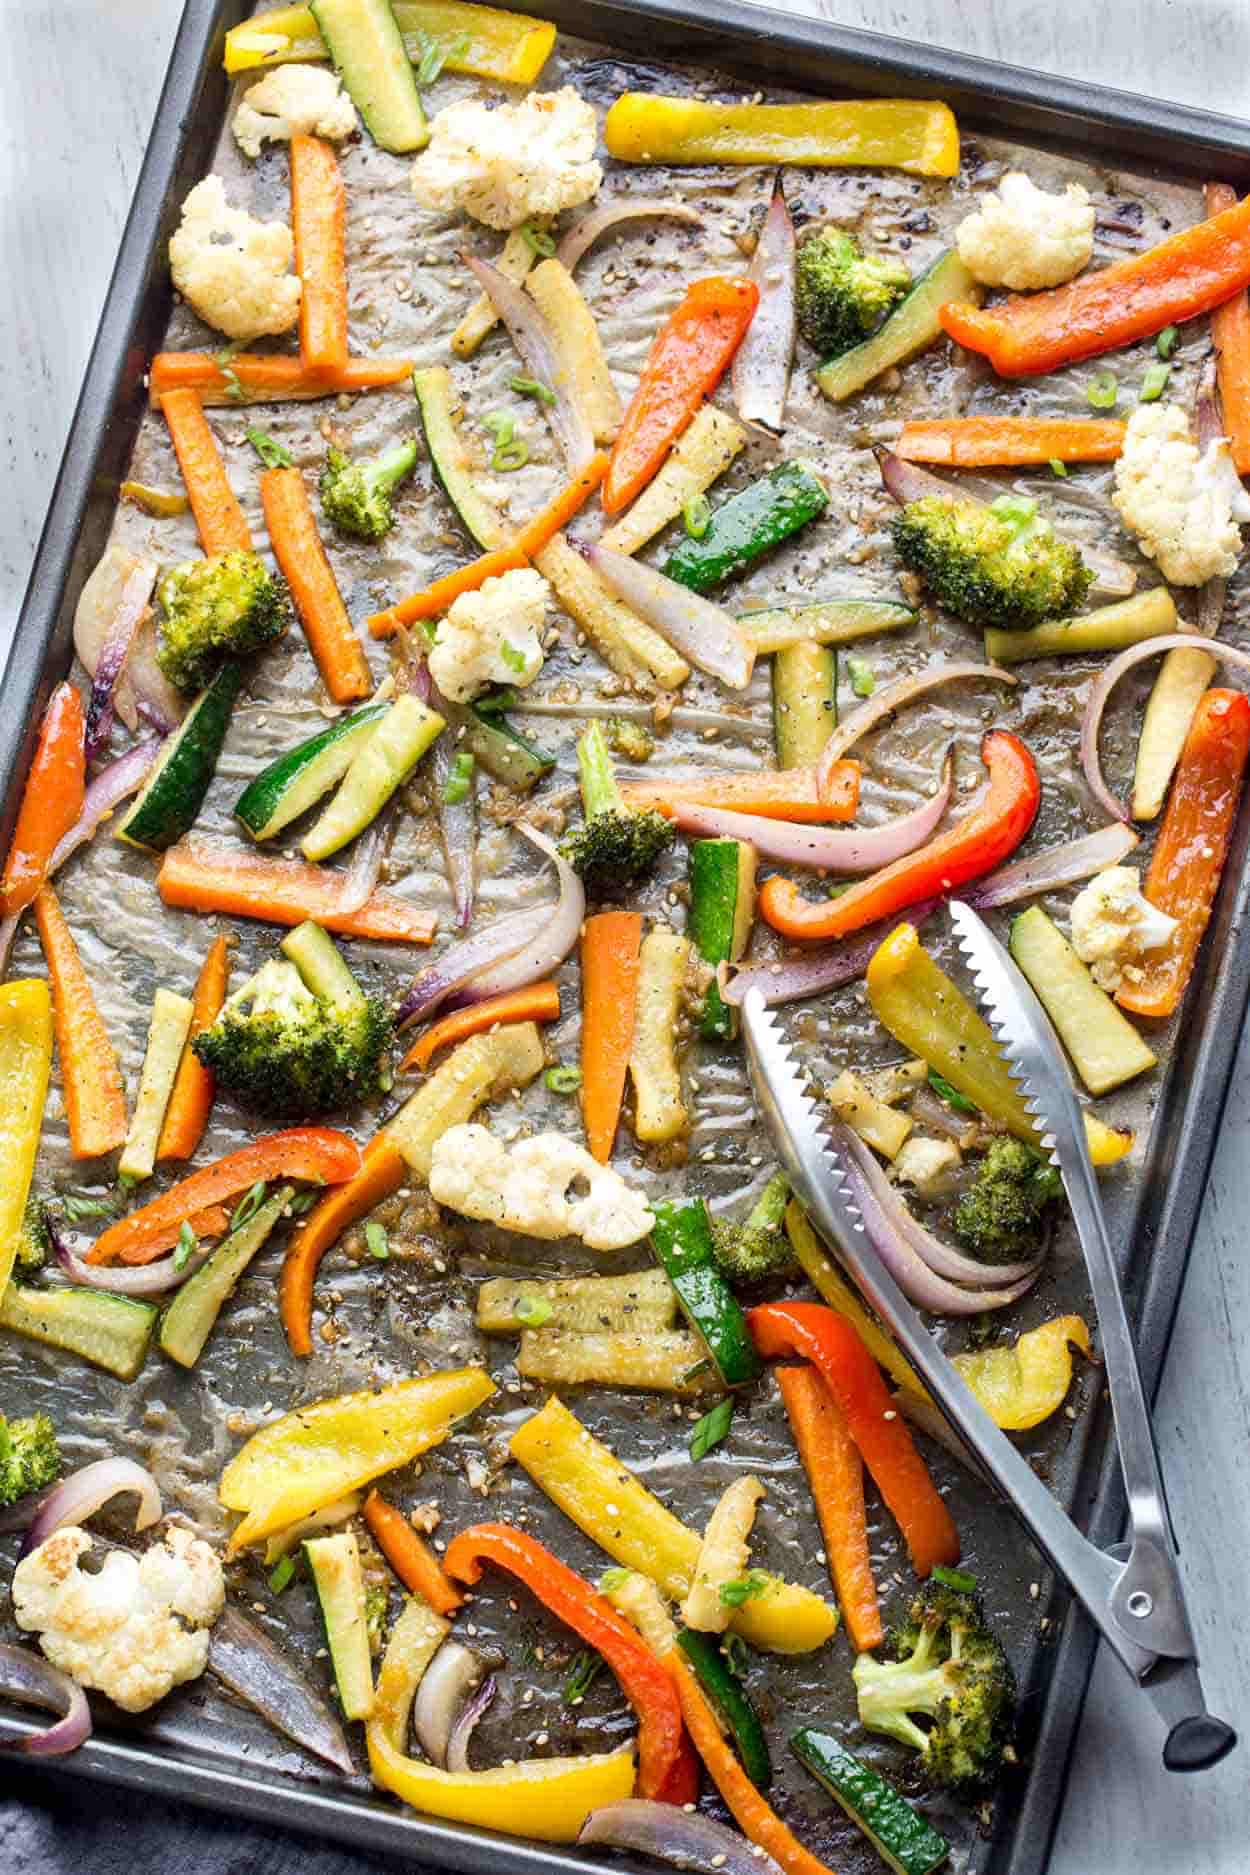 Roasted vegetables on a baking sheet, roasted into tender vegetables.